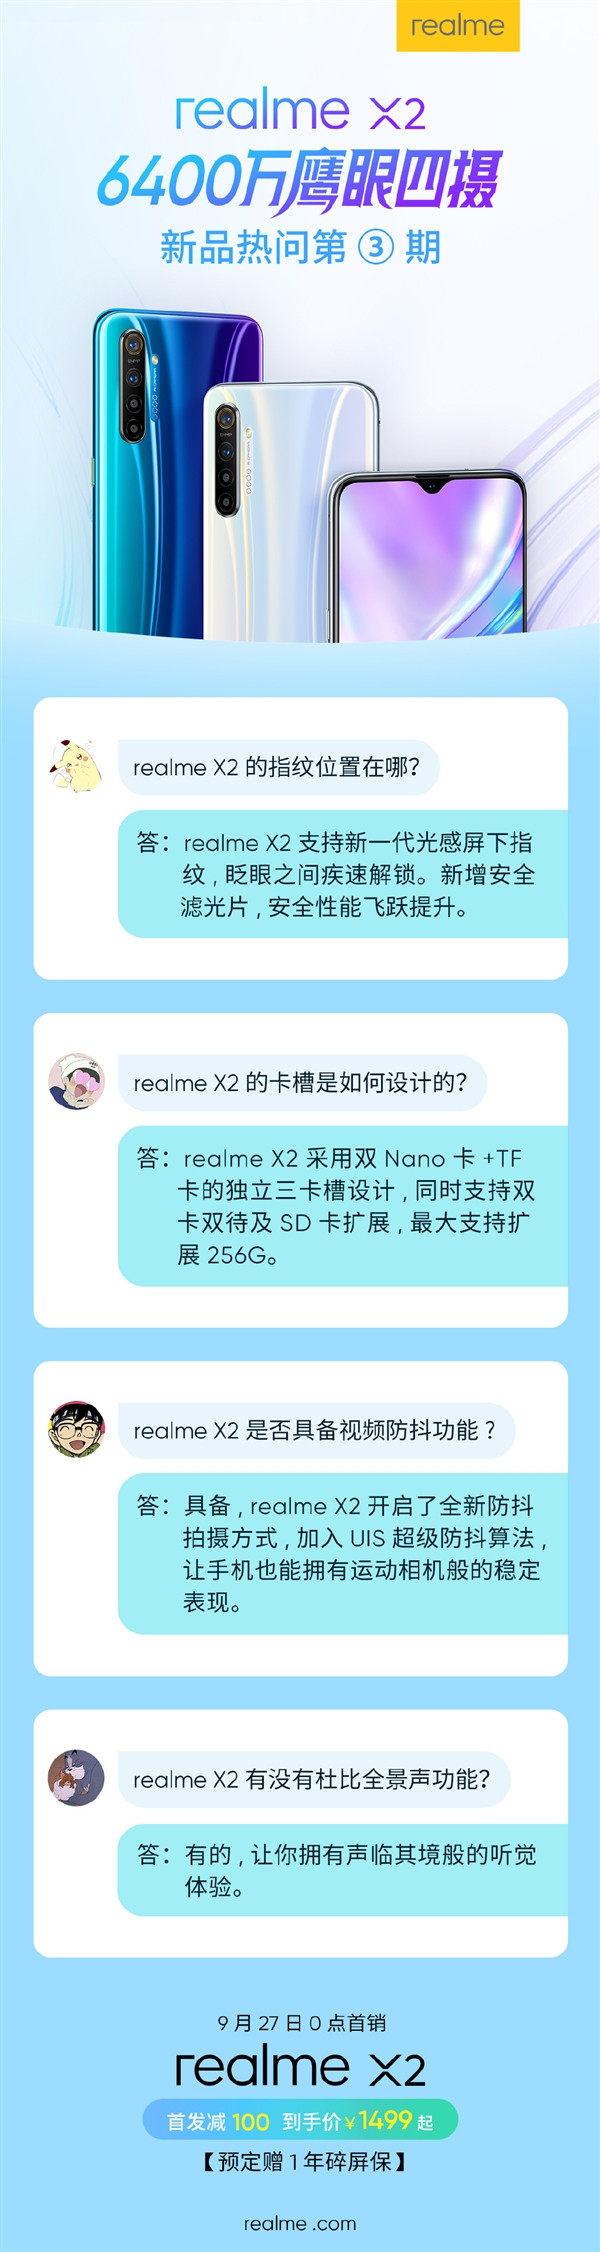 NFC+30W VOOC 4.0：realme X2 正式发售